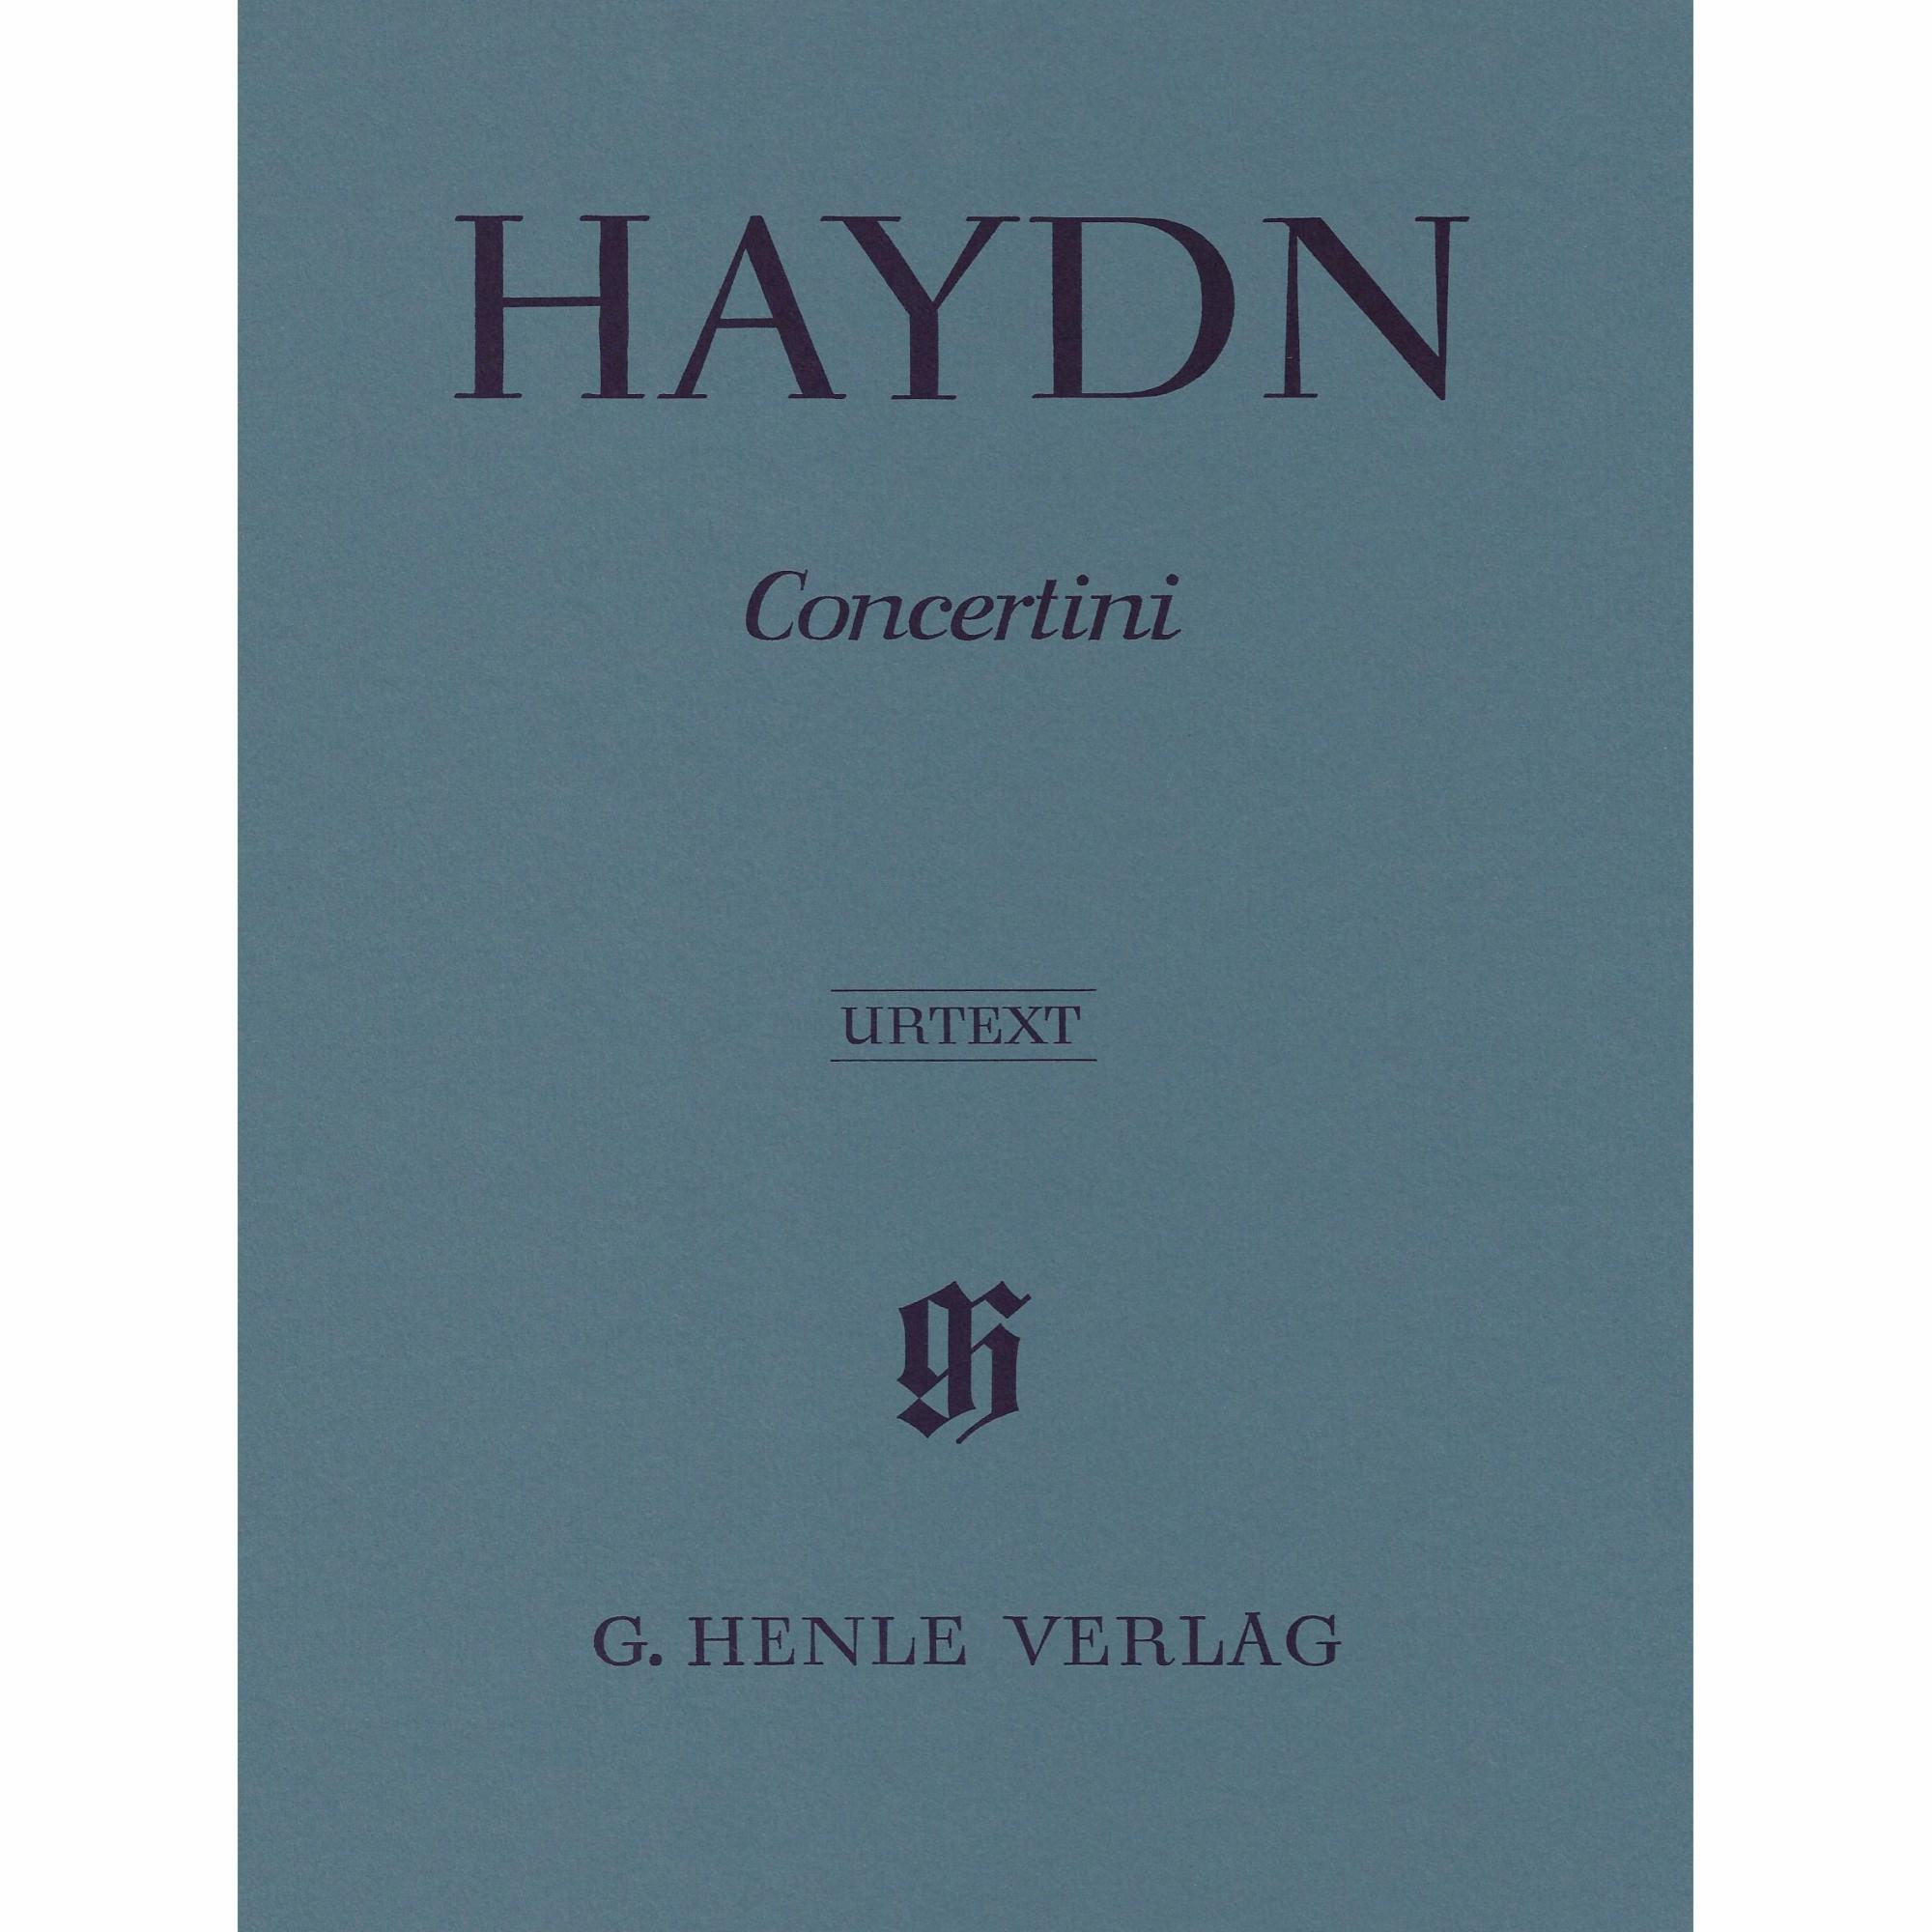 Haydn -- Concertini for Two Violins, Cello, and Piano